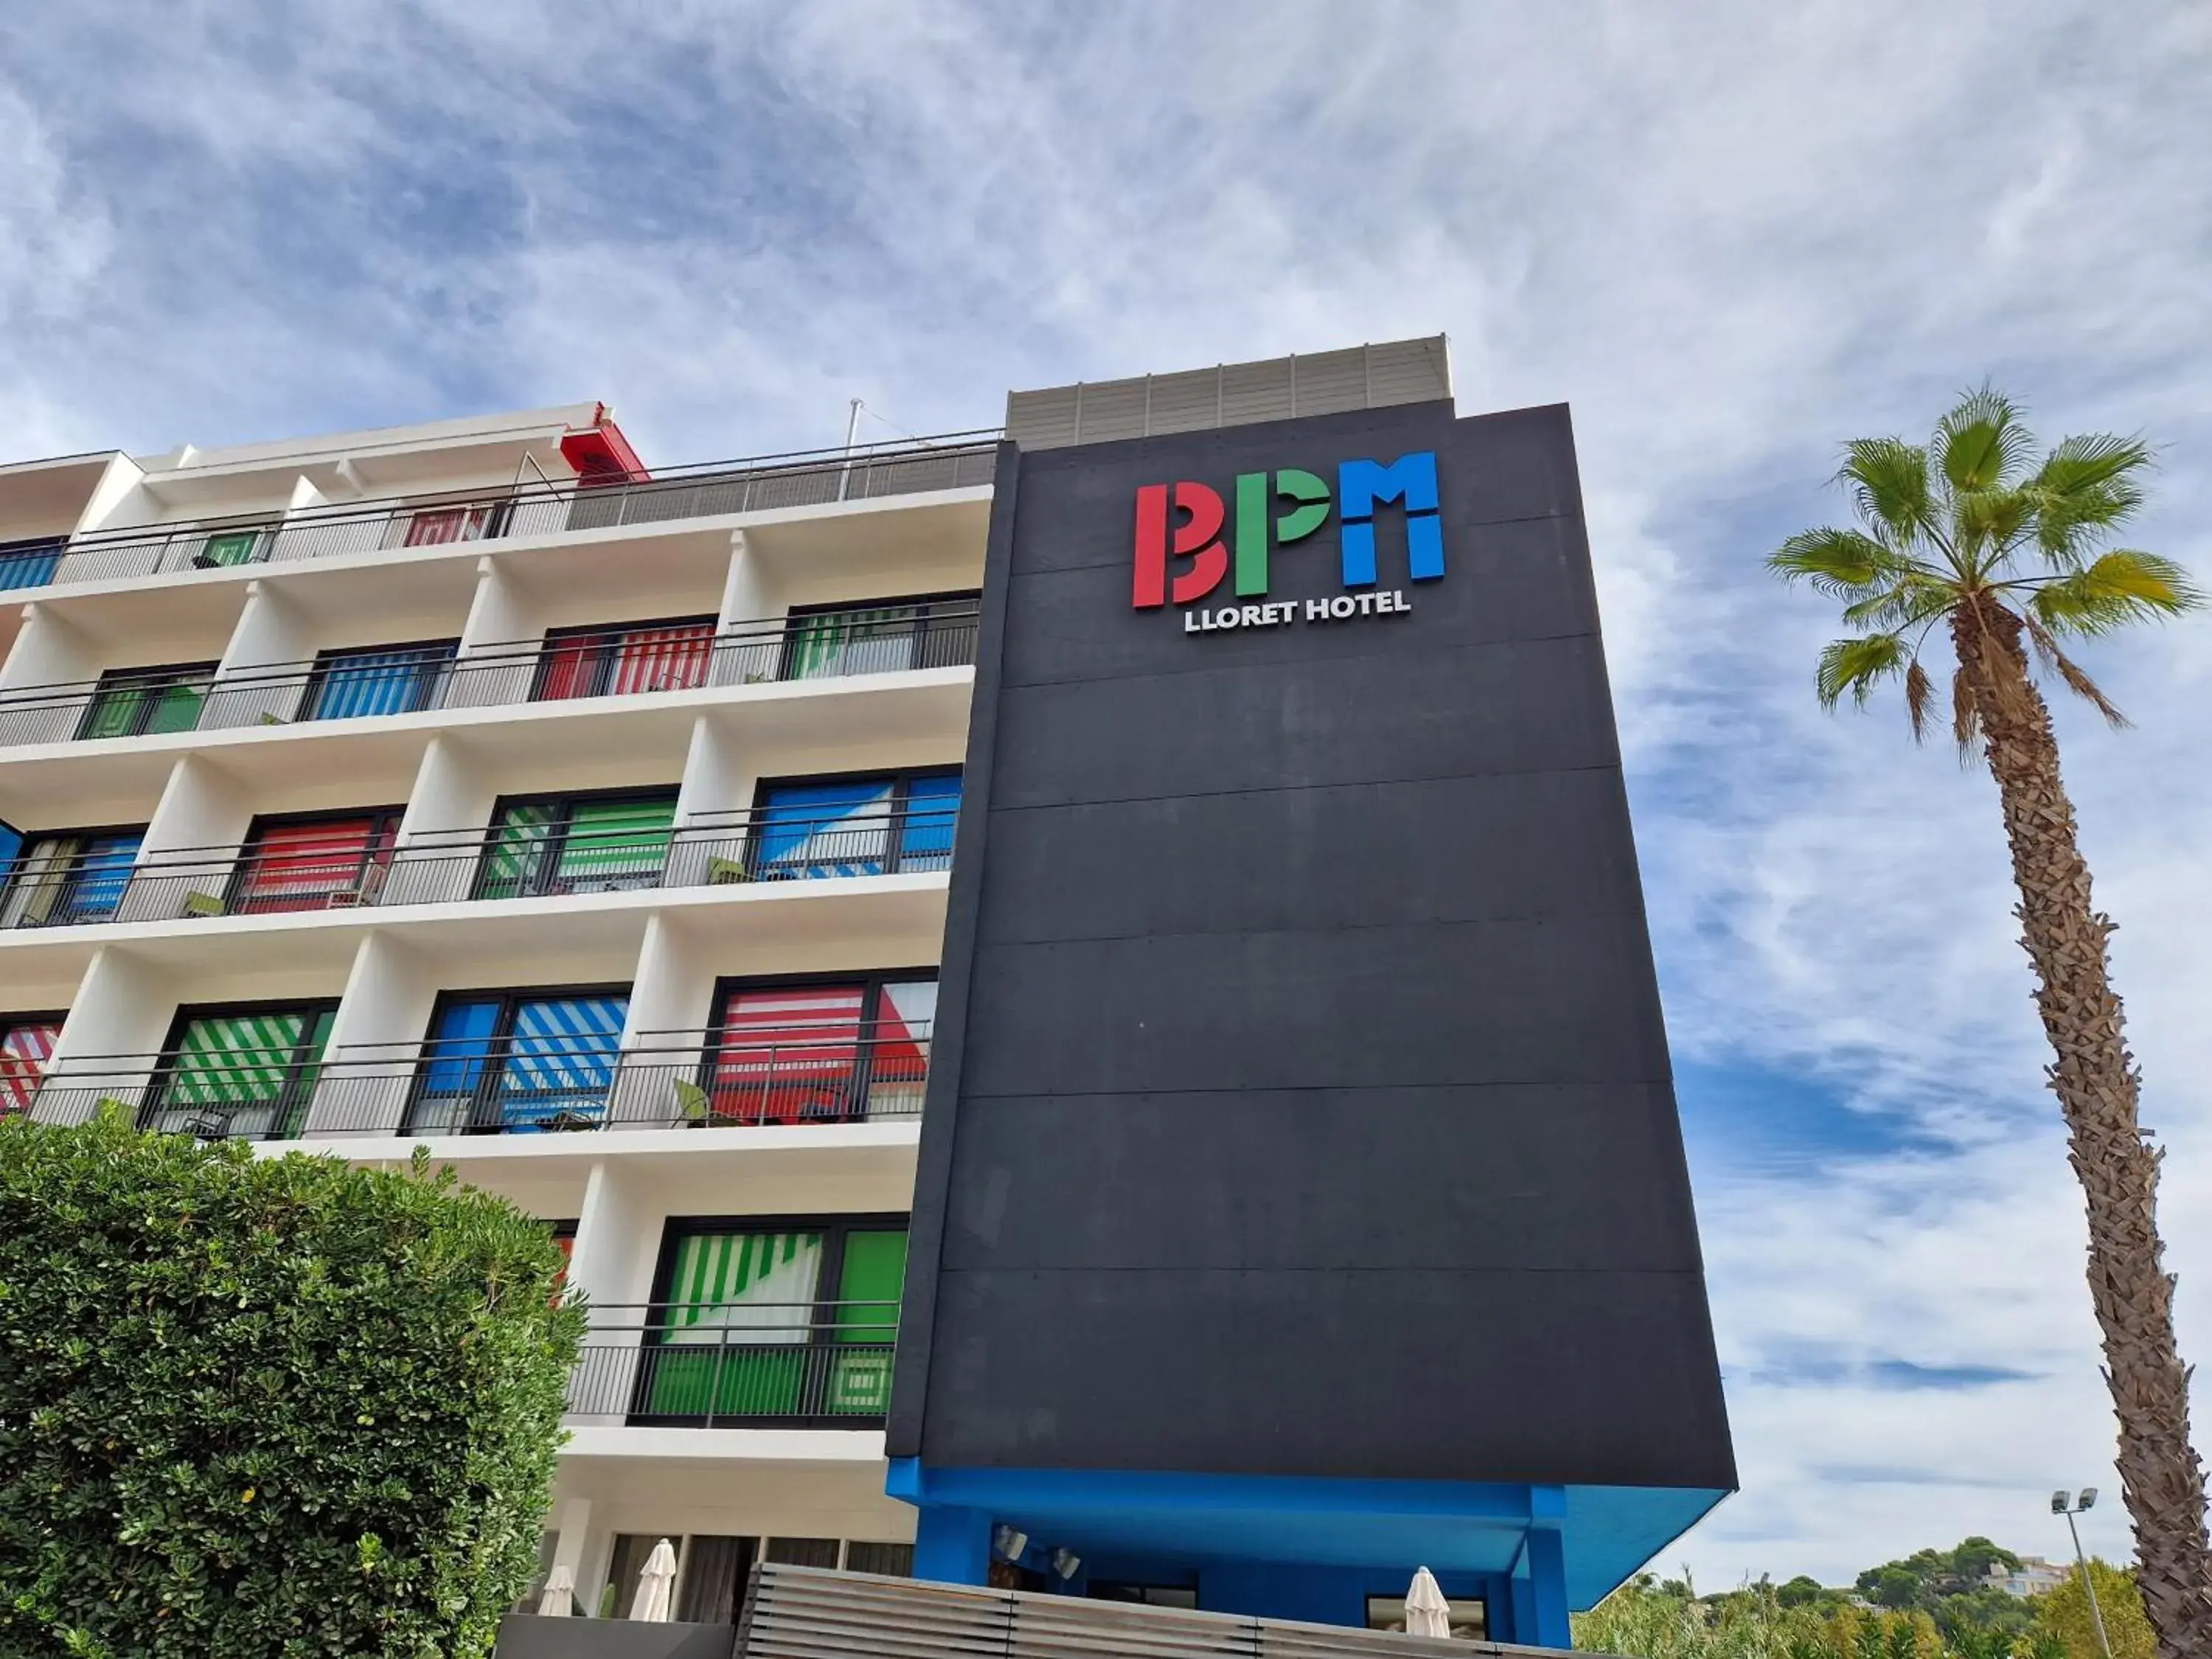 Property Building in BPM Lloret Hotel - 30º Hotels